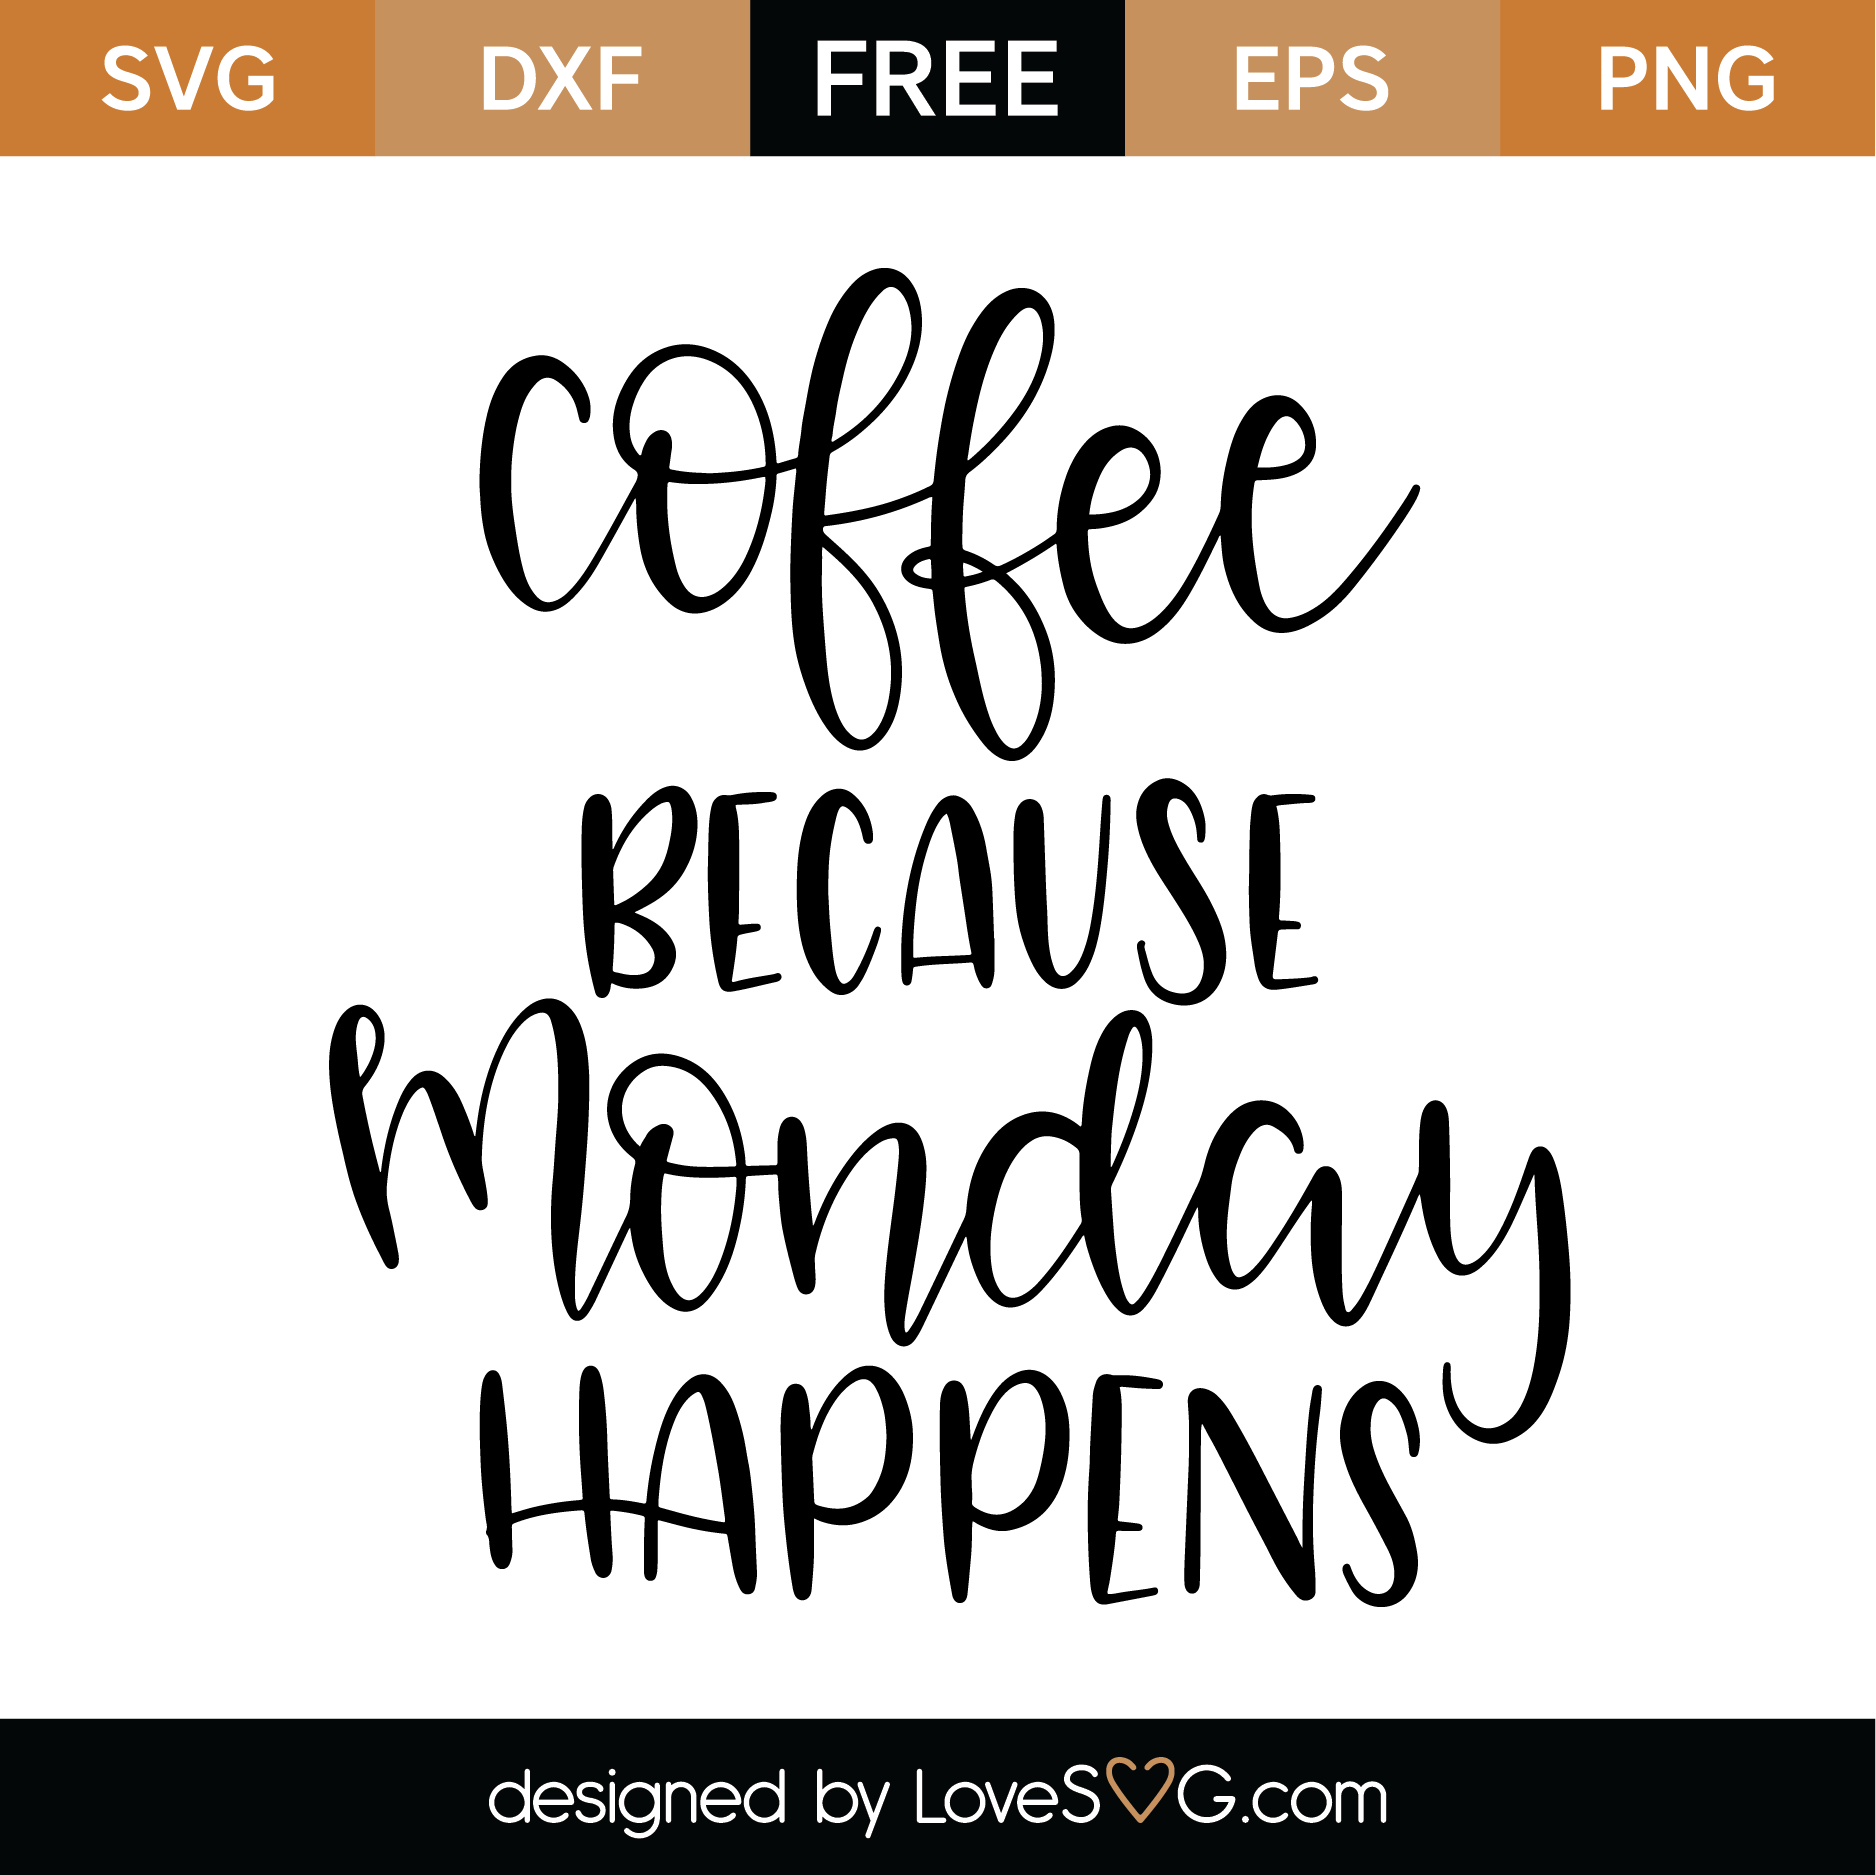 Download Free Coffee Because Monday Happens SVG Cut File | Lovesvg.com